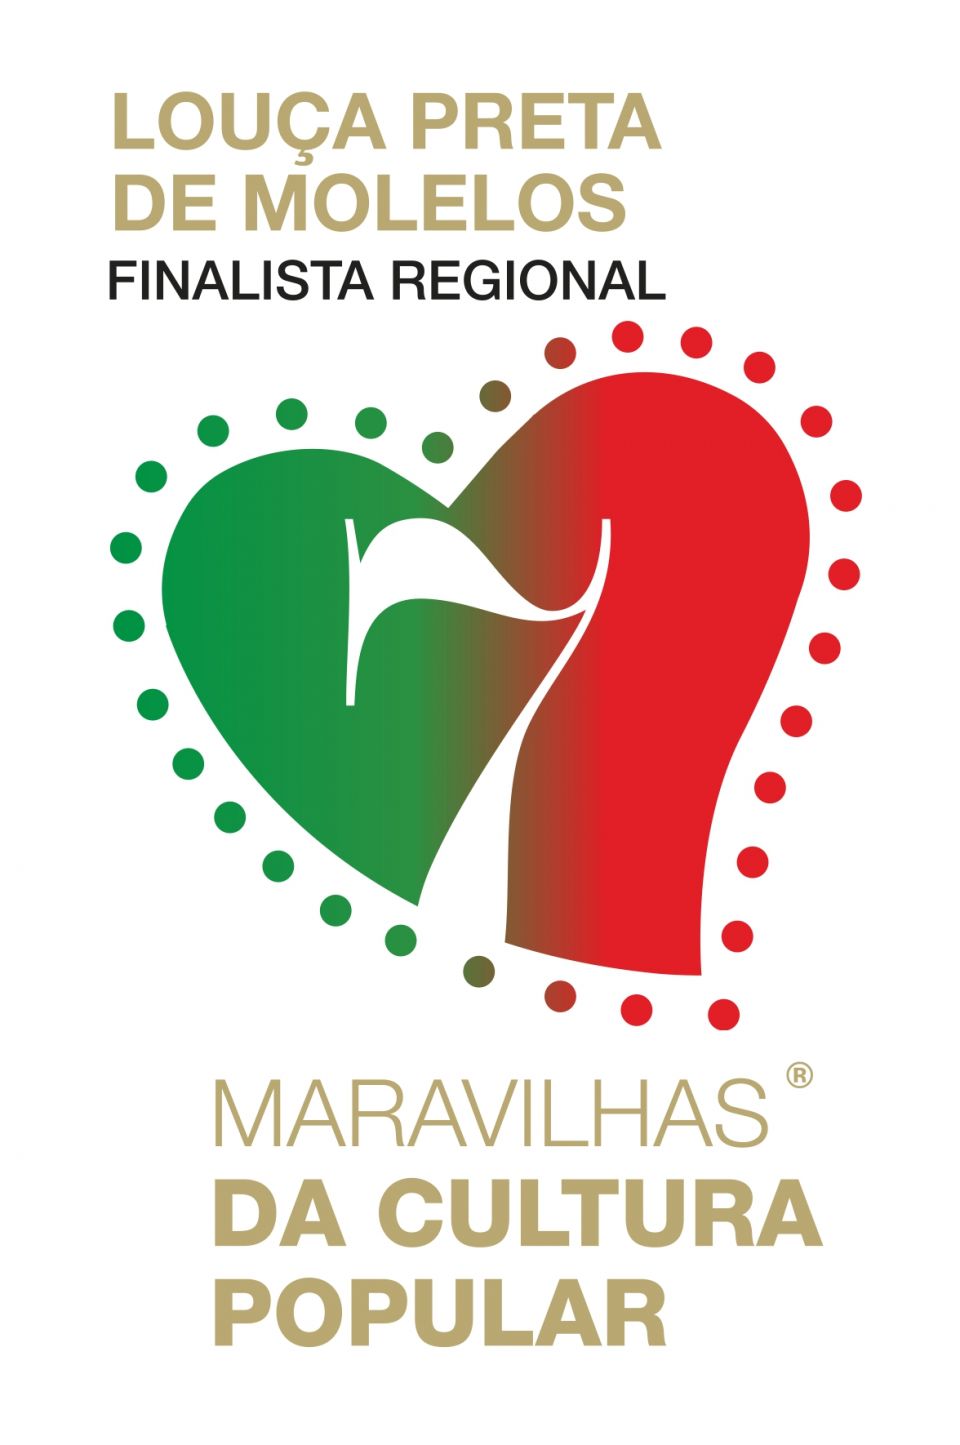 Louça Preta de Molelos - Finalista Regional